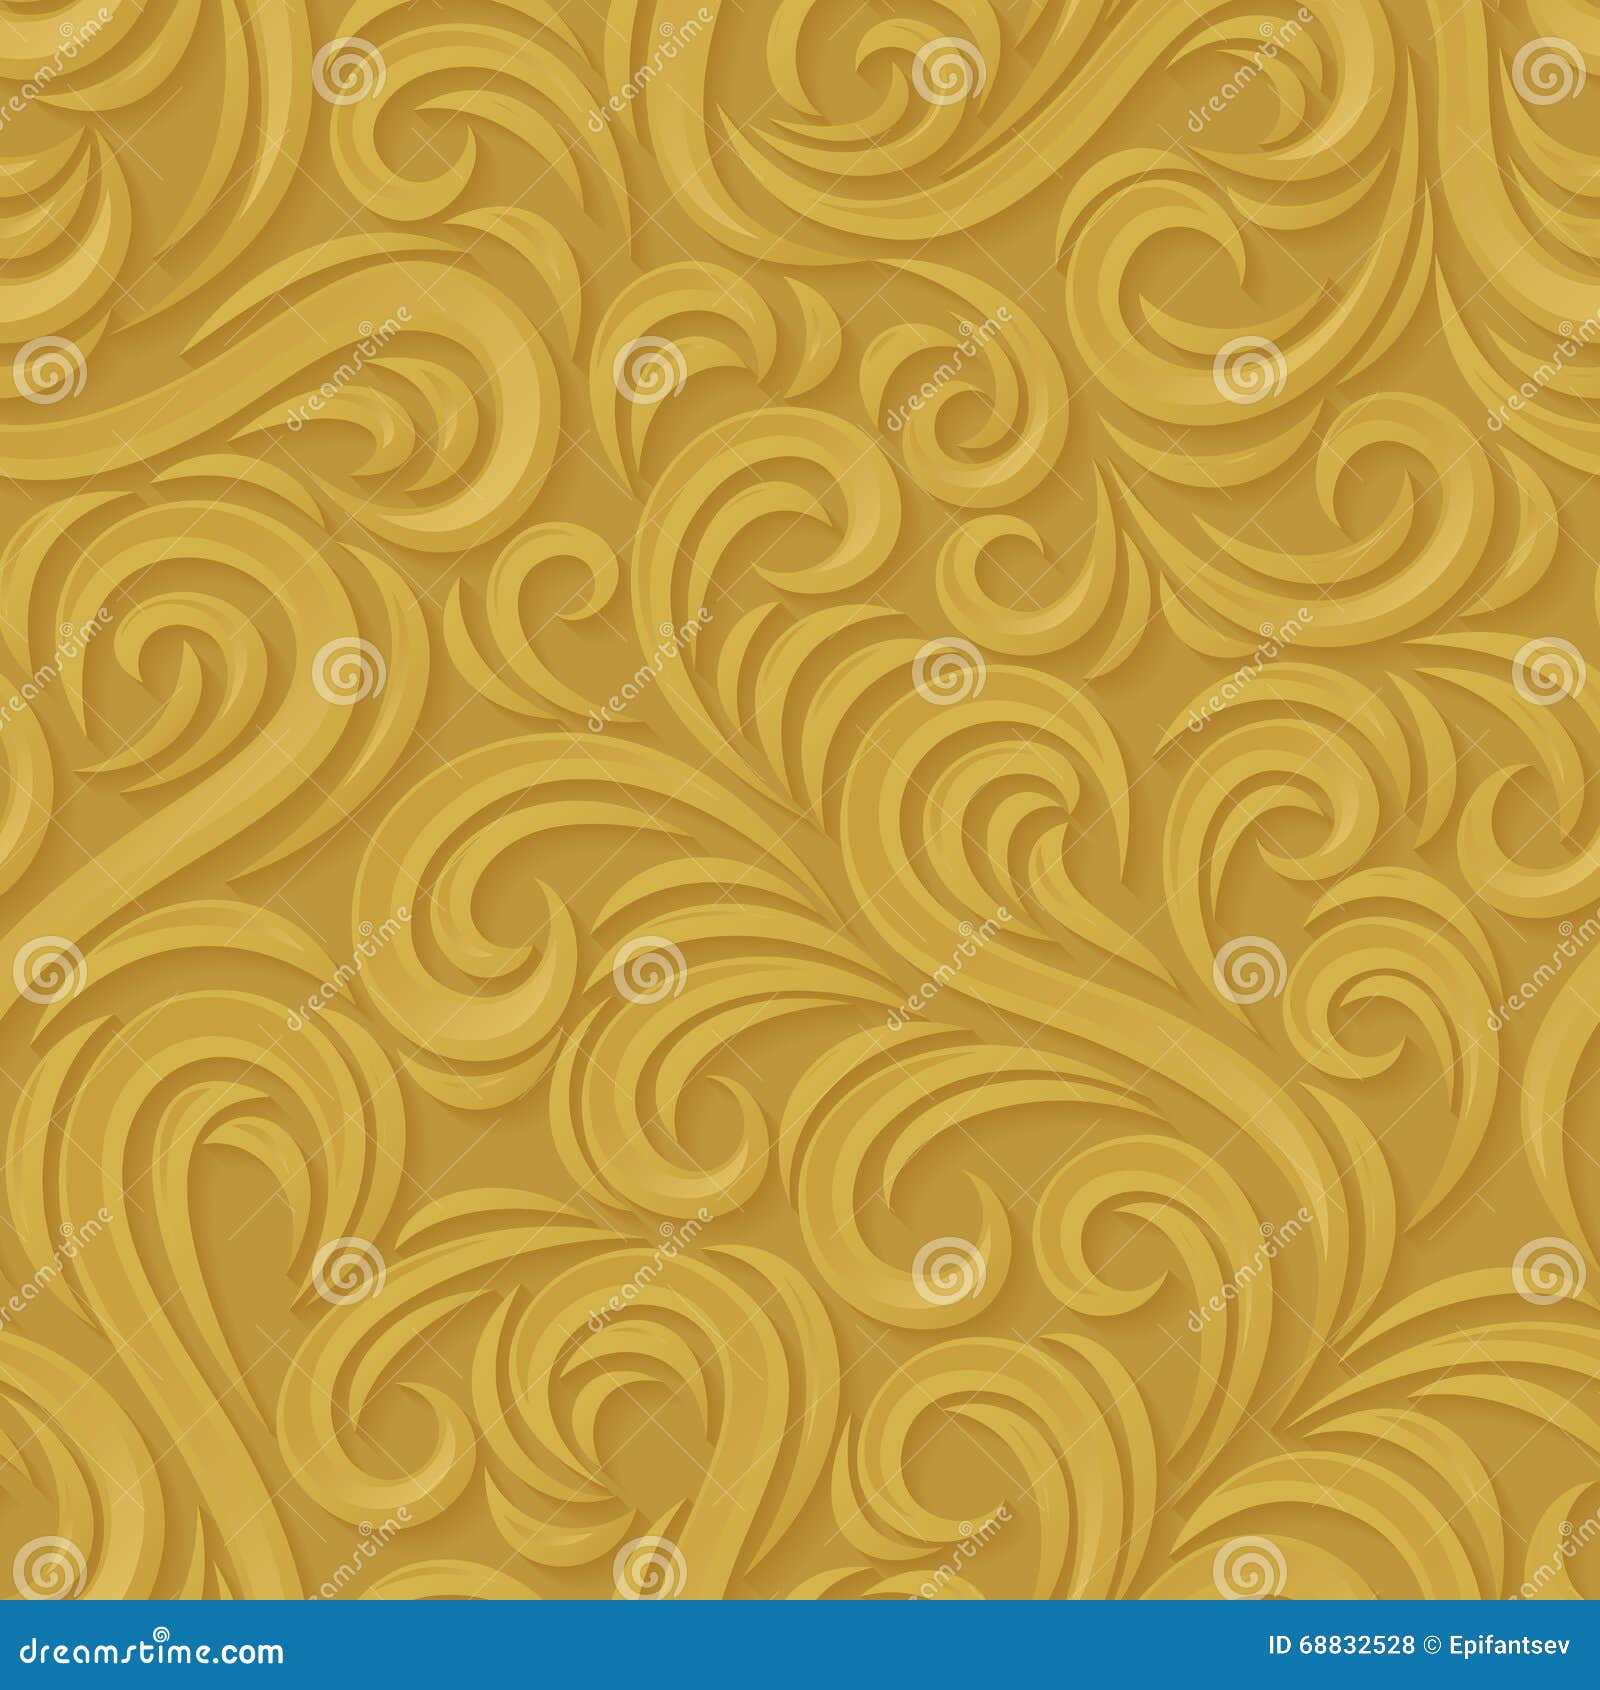 golden swirl seamless pattern.